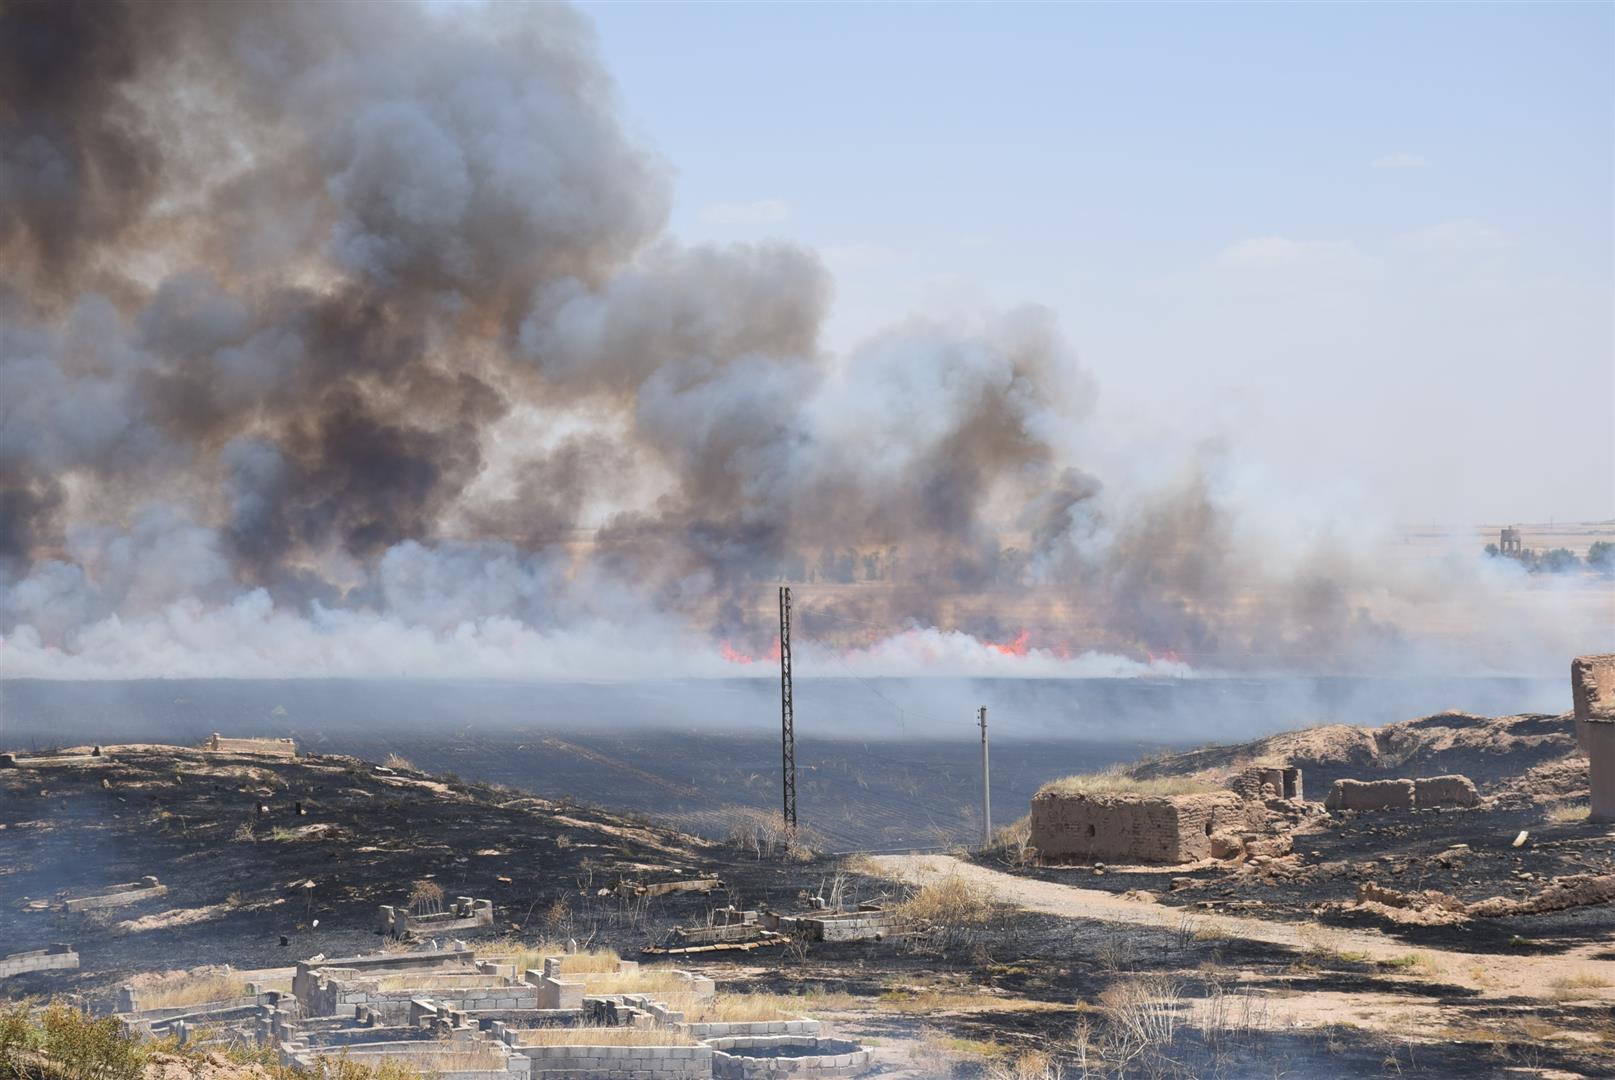 Fires ... targets civilians' livelihood